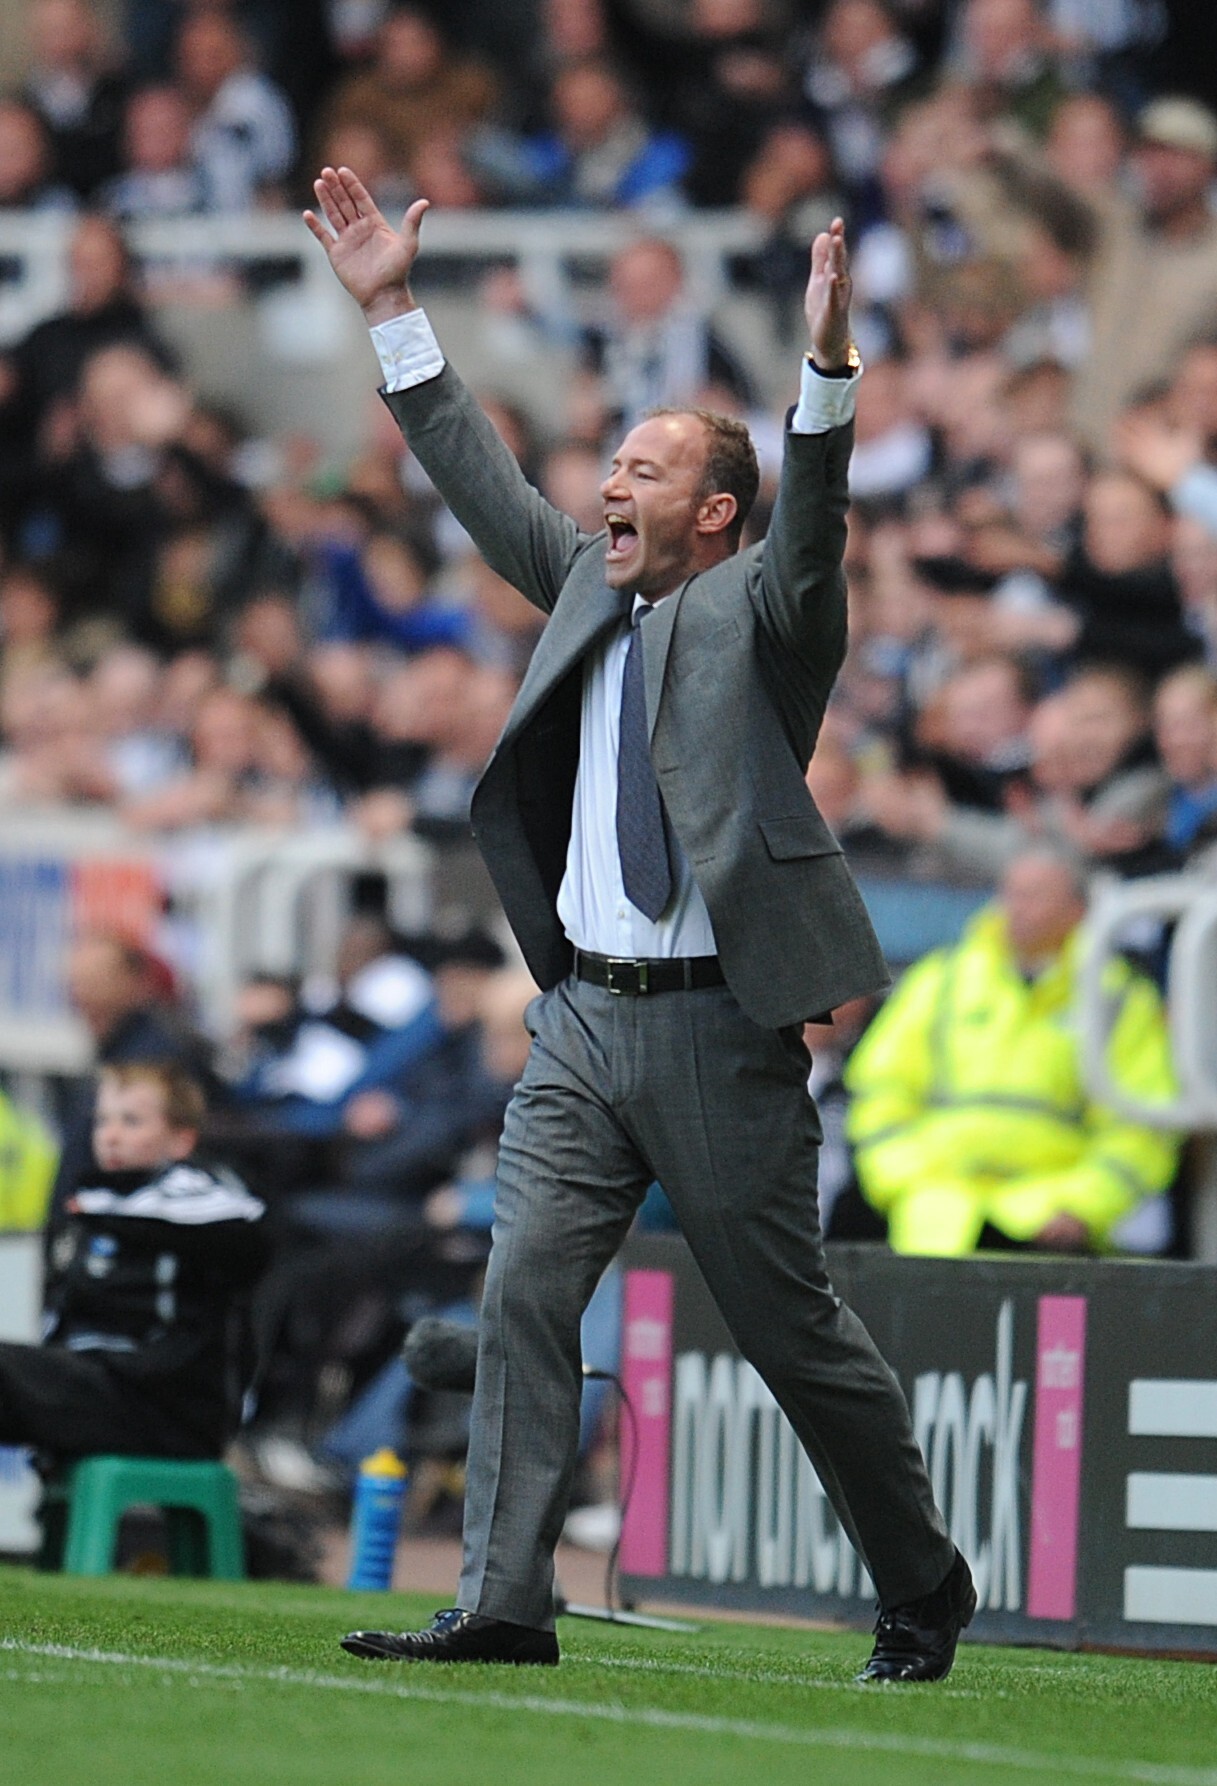 2009 Newcastle United manager Alan Shearer